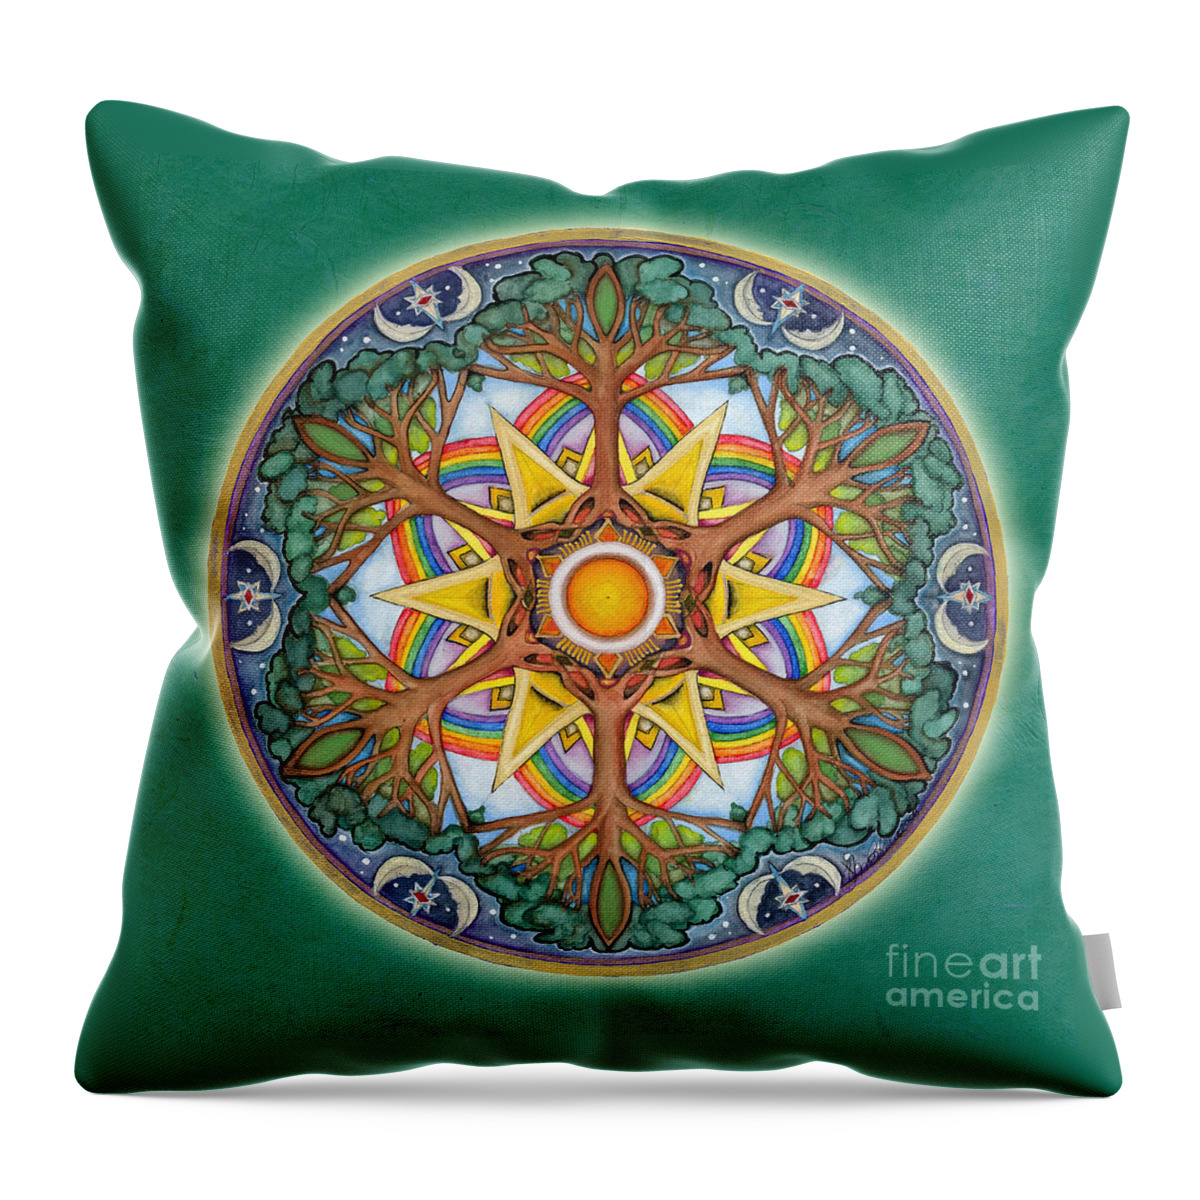 Mandala Throw Pillow featuring the painting Heaven and Earth Mandala by Jo Thomas Blaine